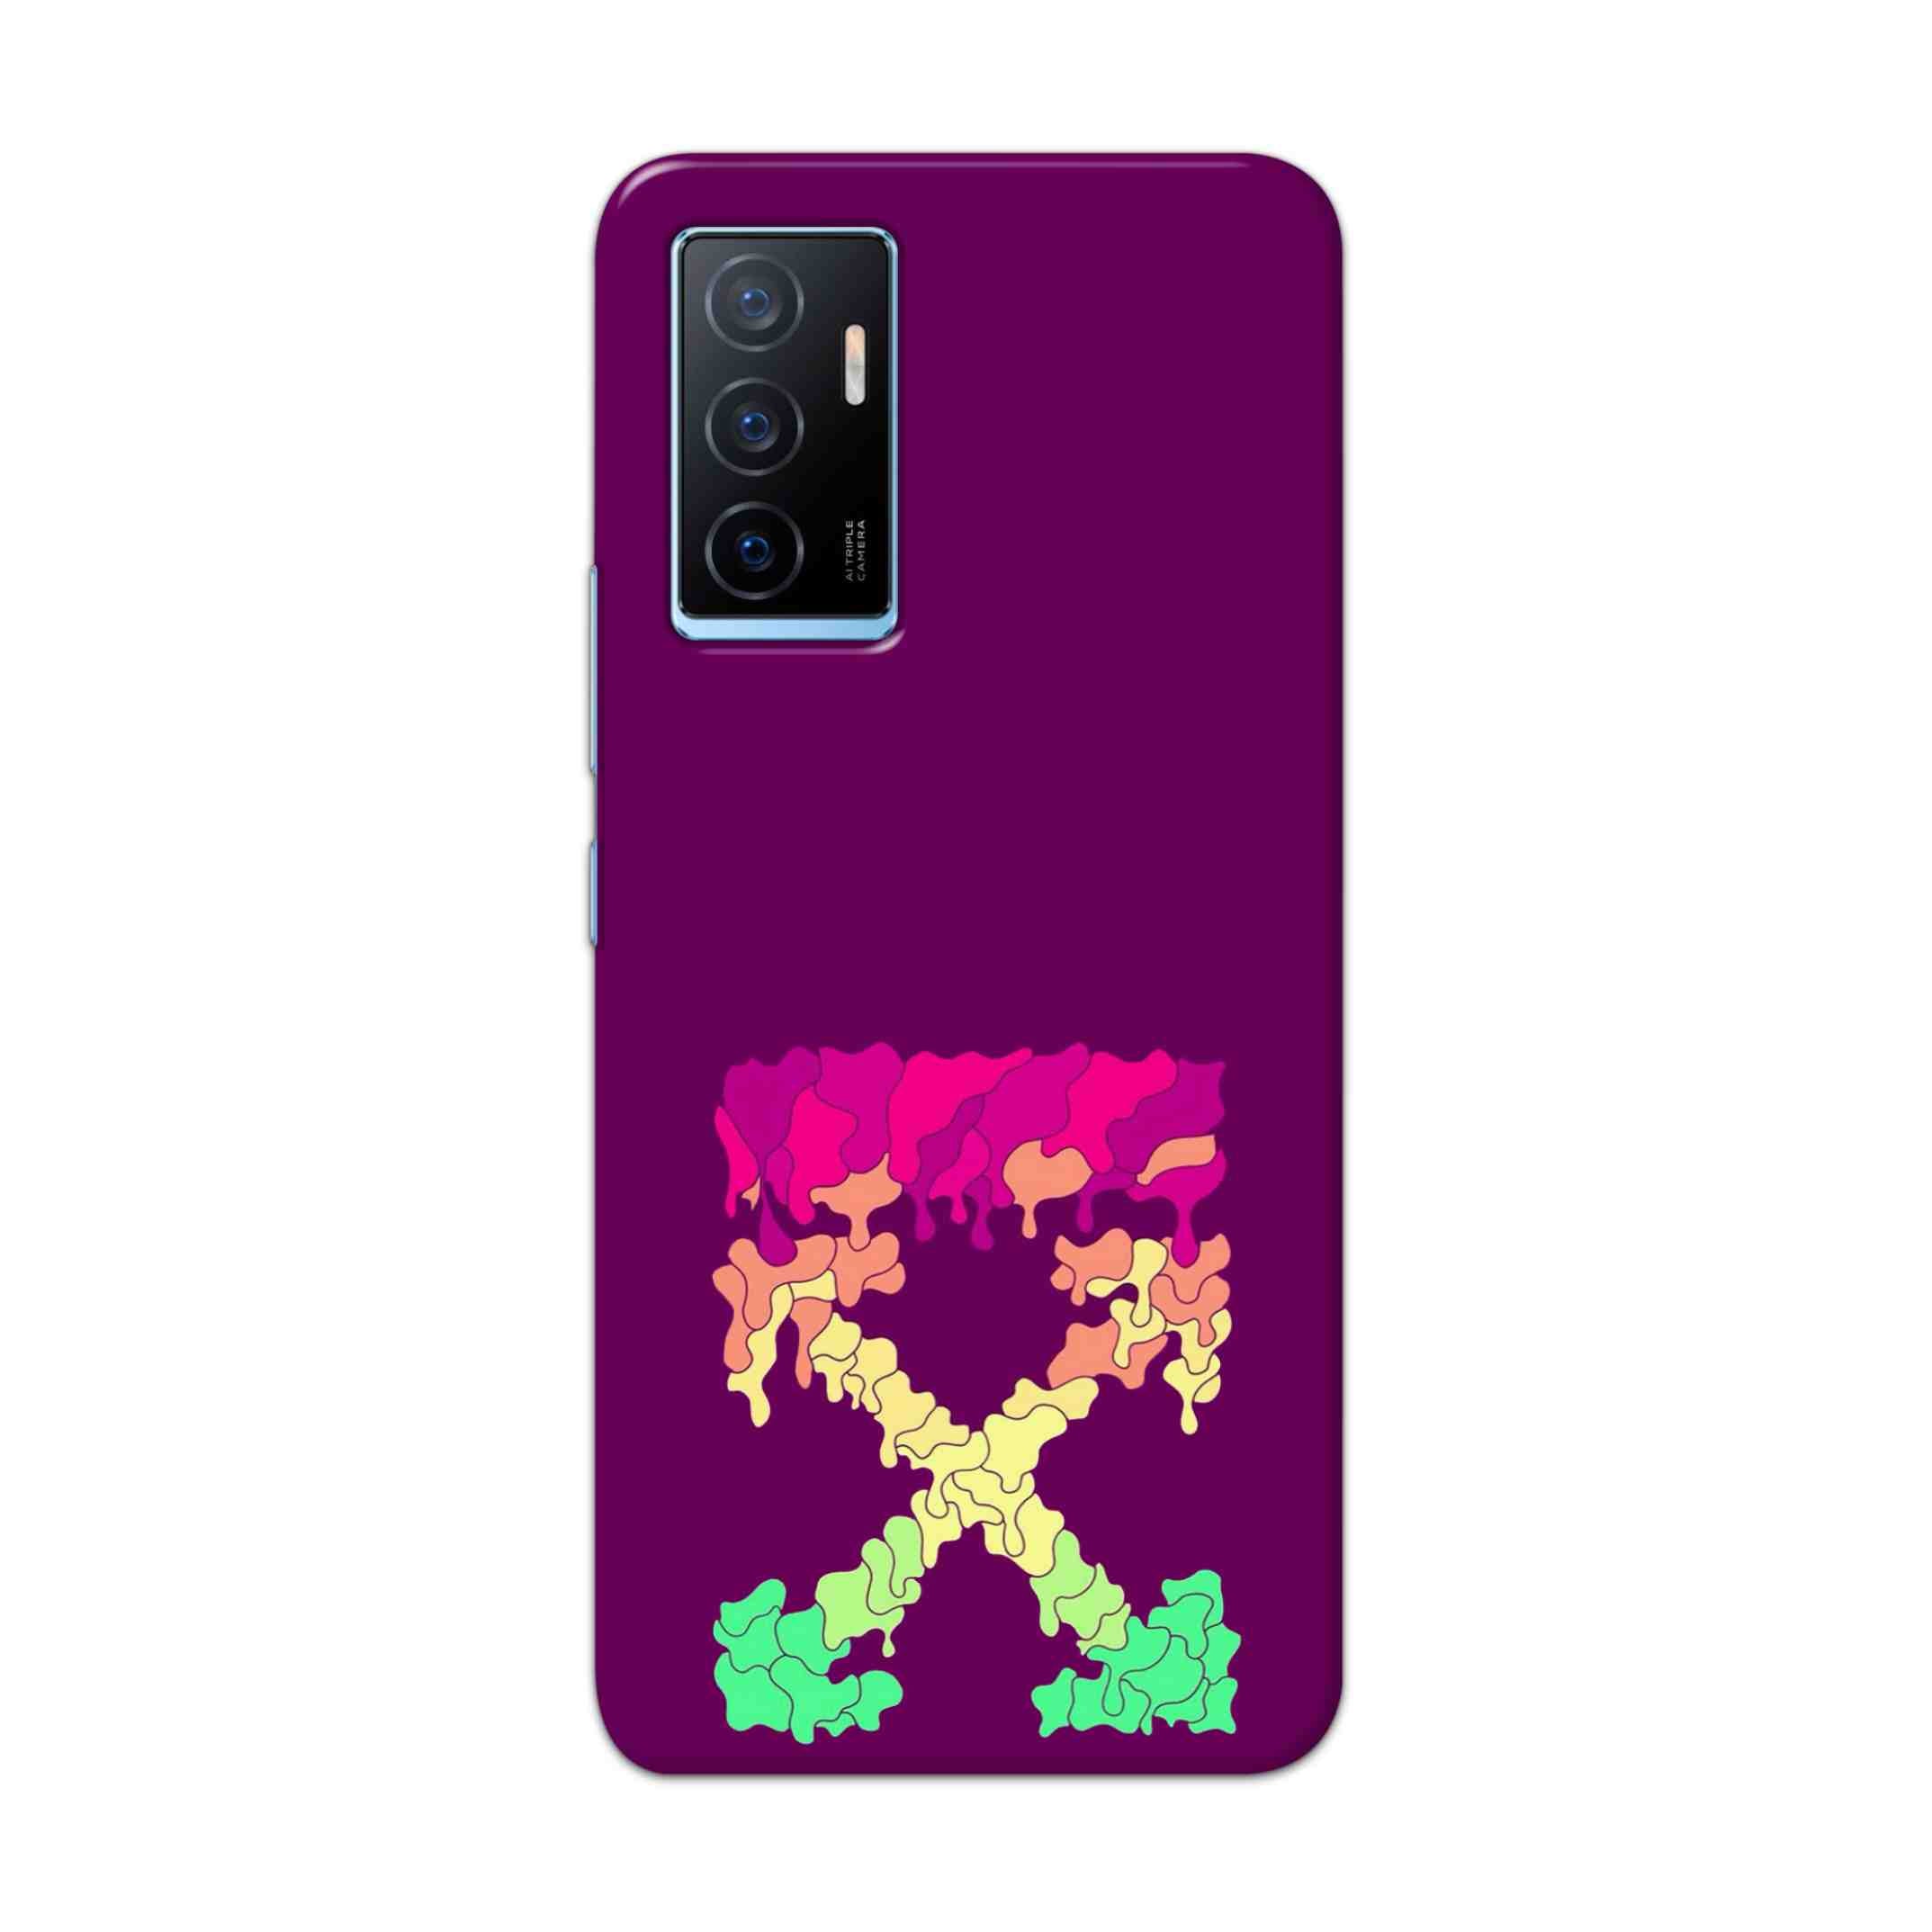 Buy X.O Hard Back Mobile Phone Case Cover For Vivo Y75 4G Online